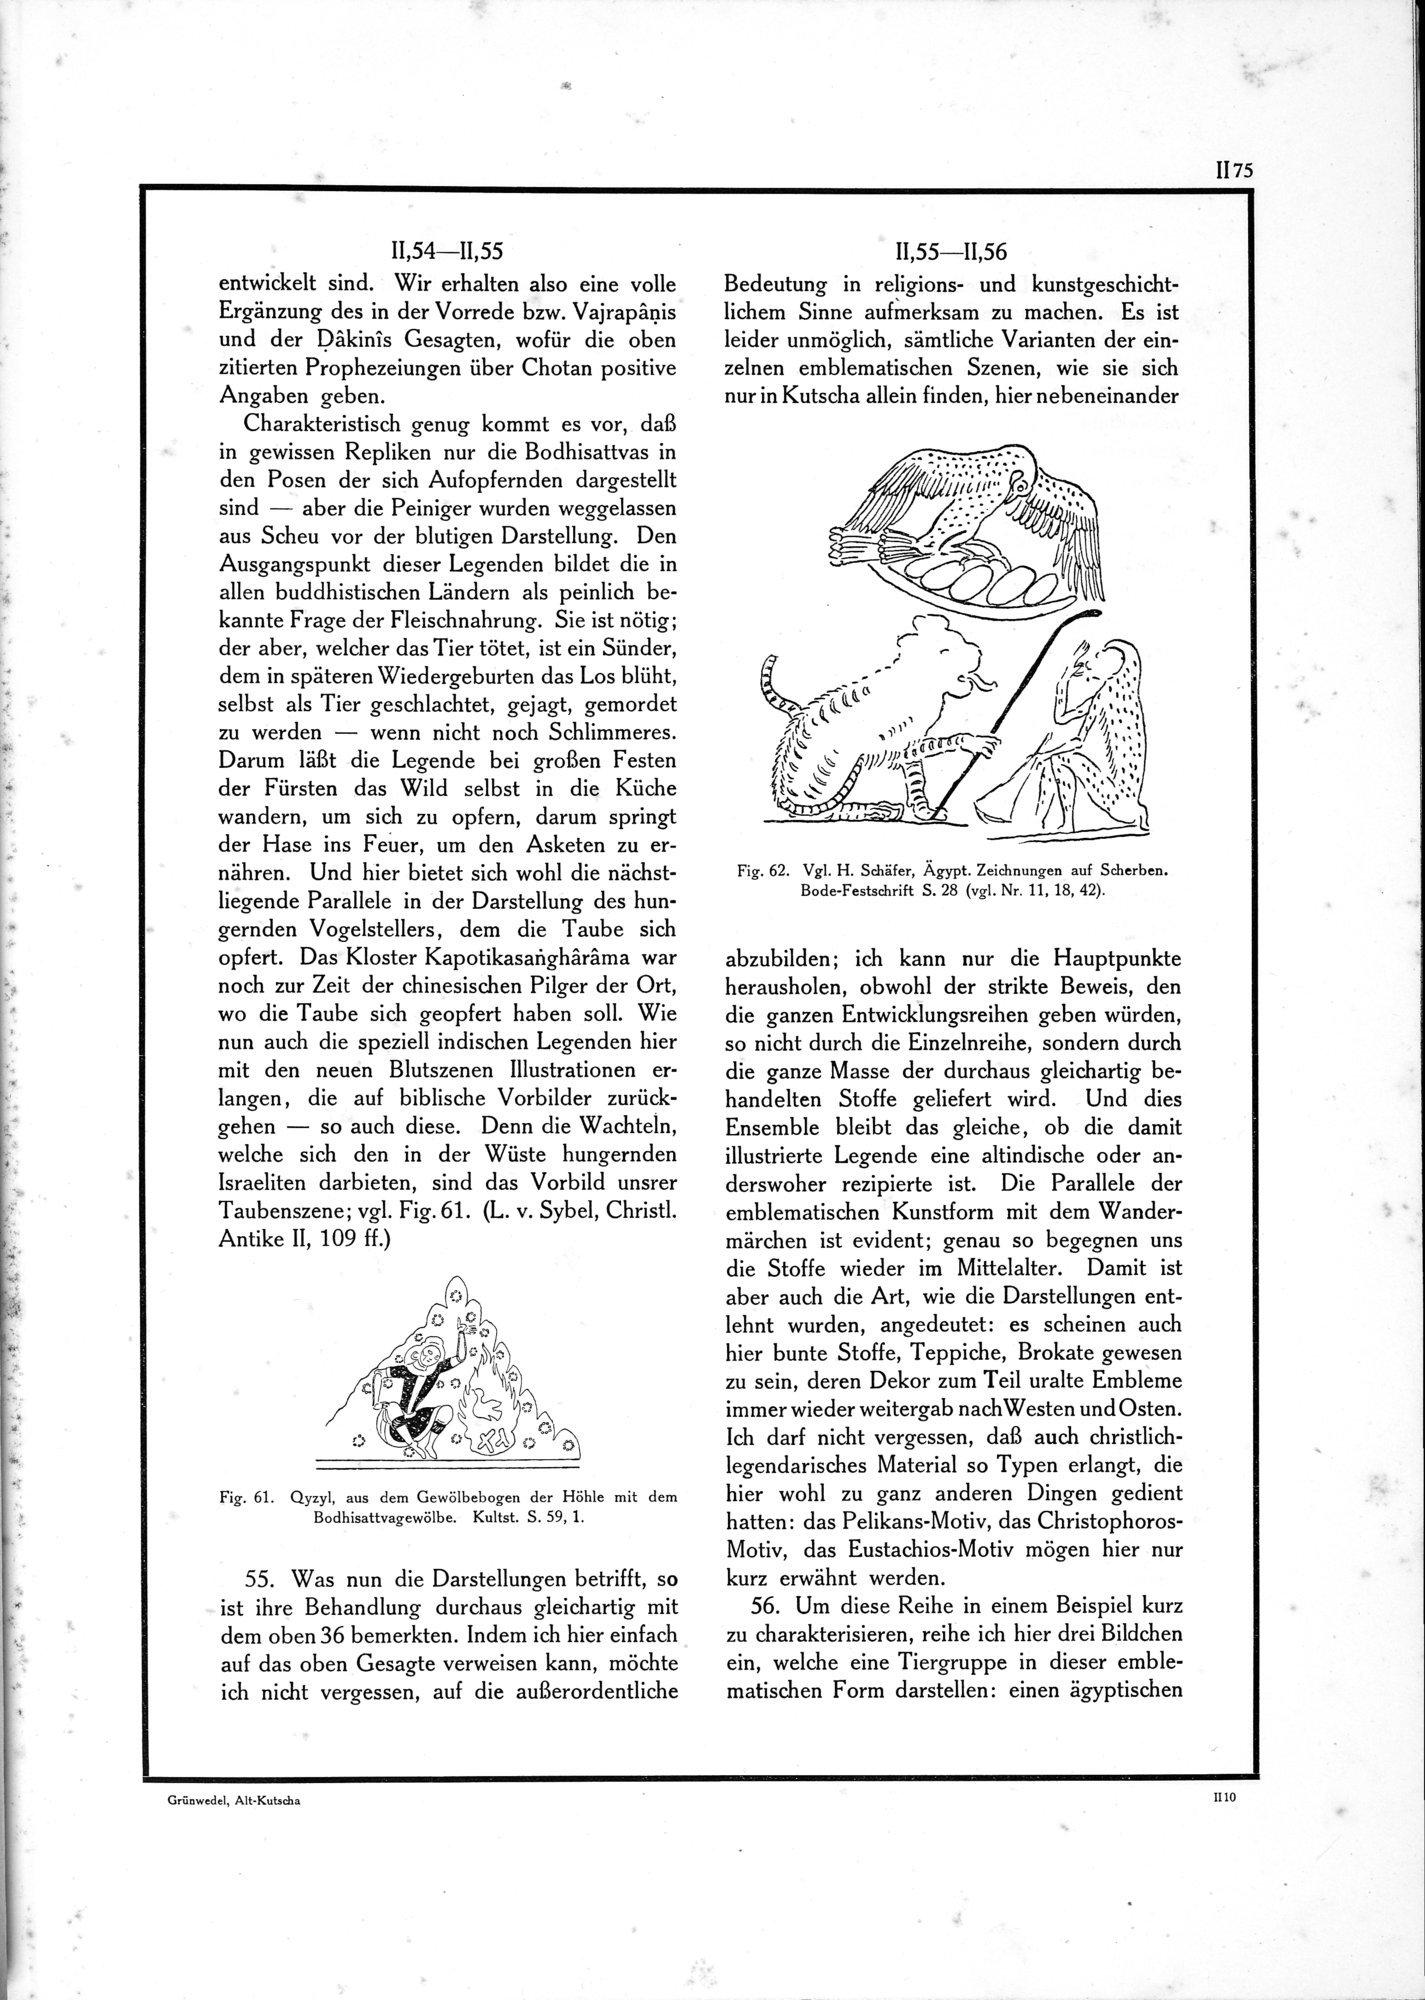 Alt-Kutscha : vol.1 / Page 189 (Grayscale High Resolution Image)